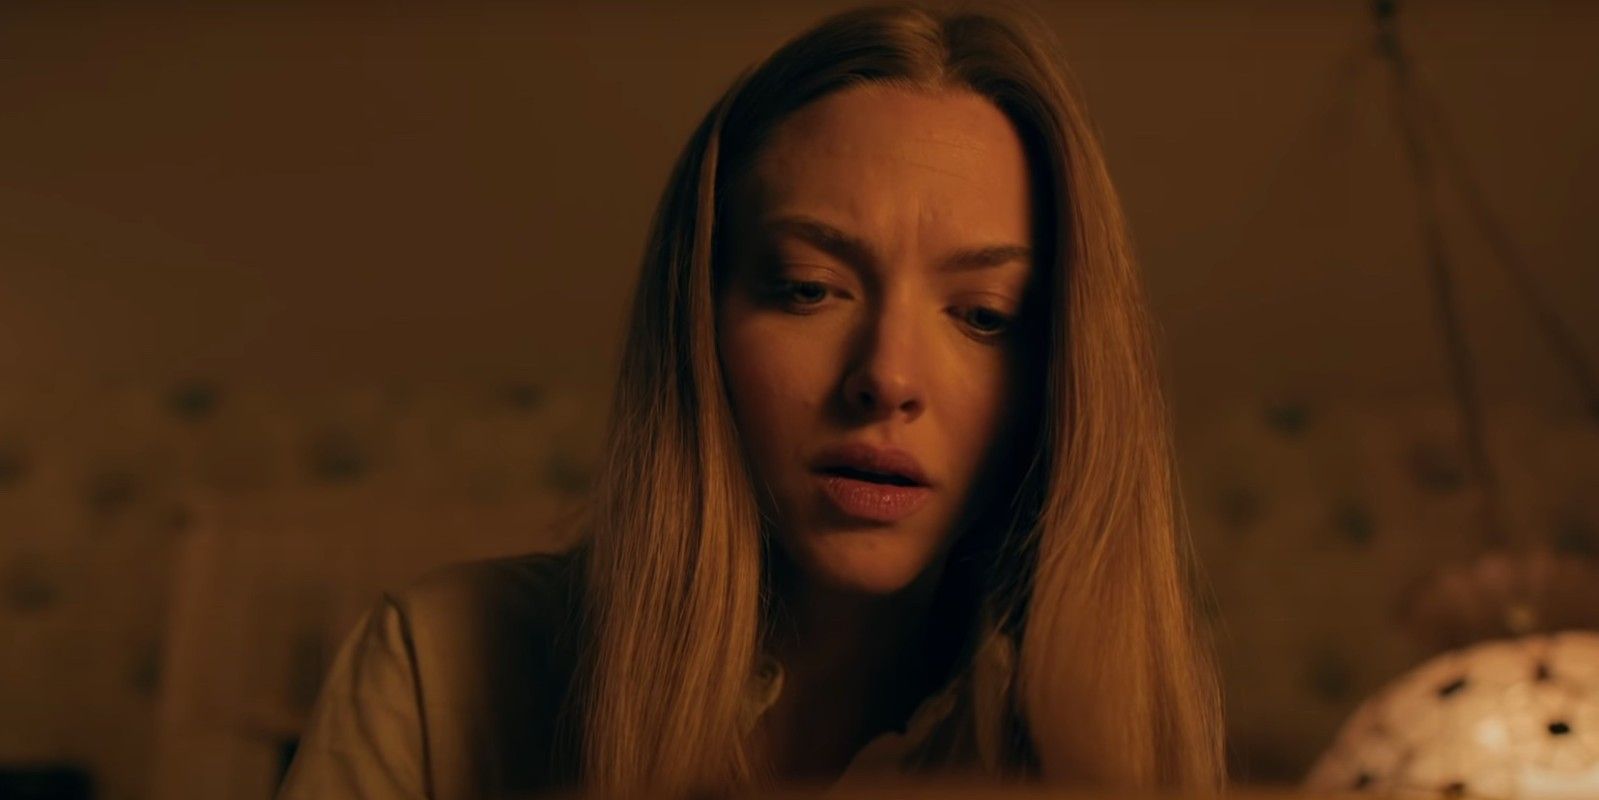 Things Heard & Seen Trailer: Amanda Seyfried Battles A Haunted House